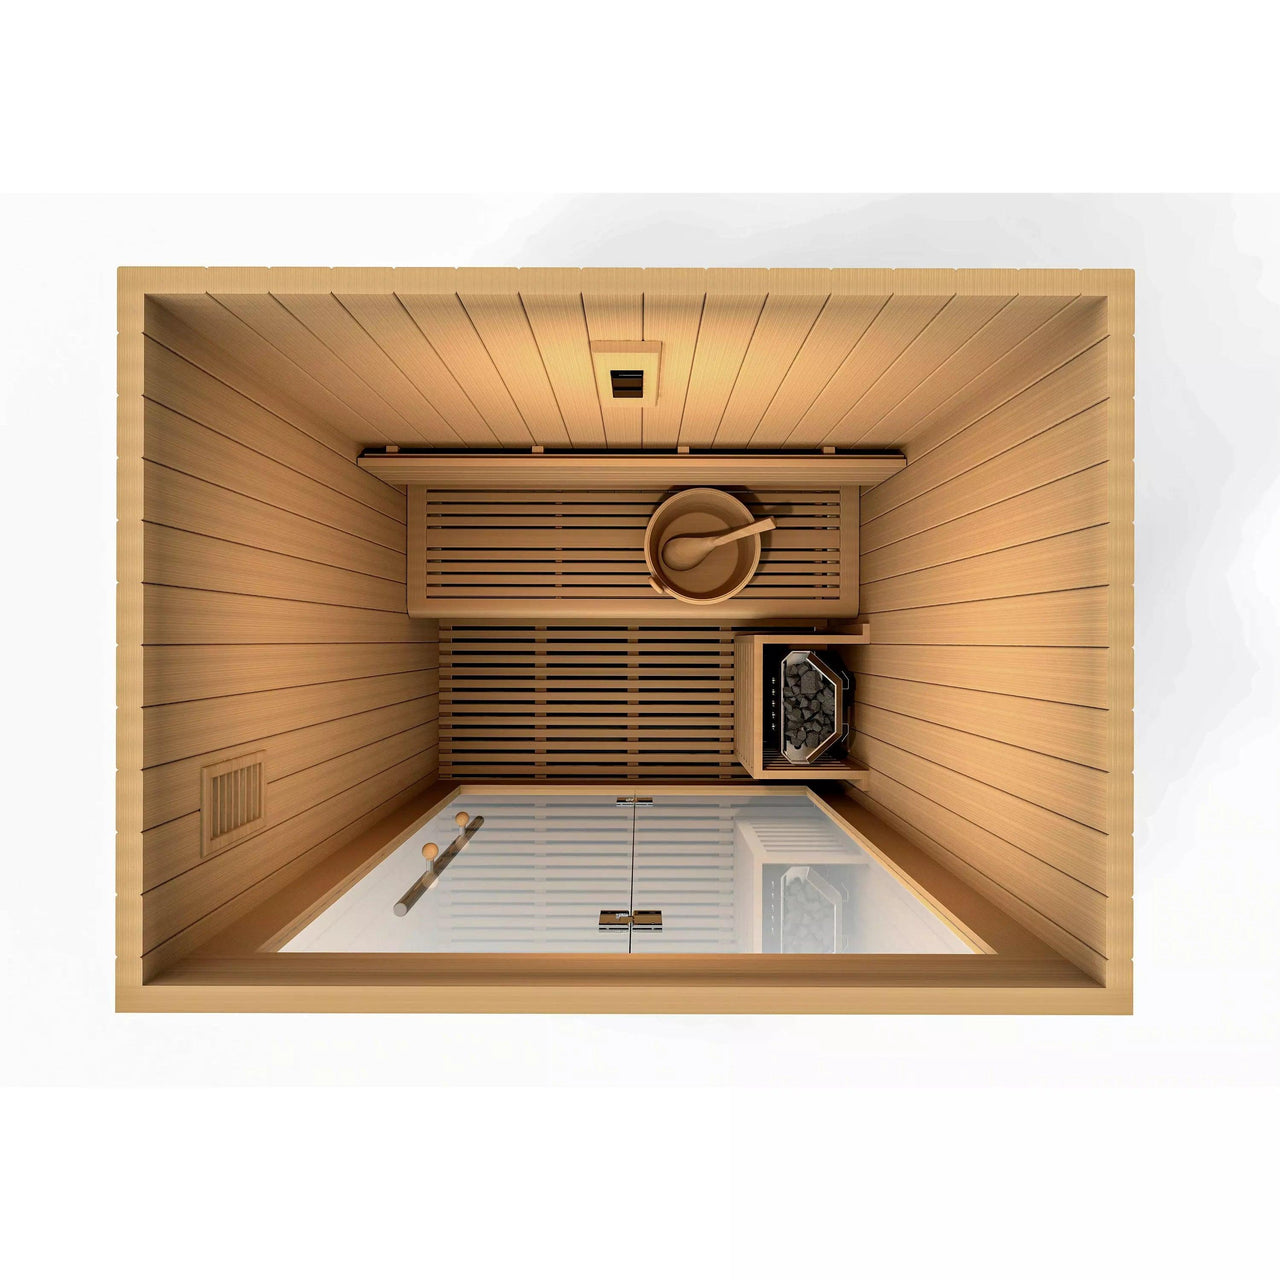 Golden Designs Sauna: "Sundsvall Edition" 2 Person Traditional Steam Sauna - Canadian Red Cedar - Fire Pit Stock